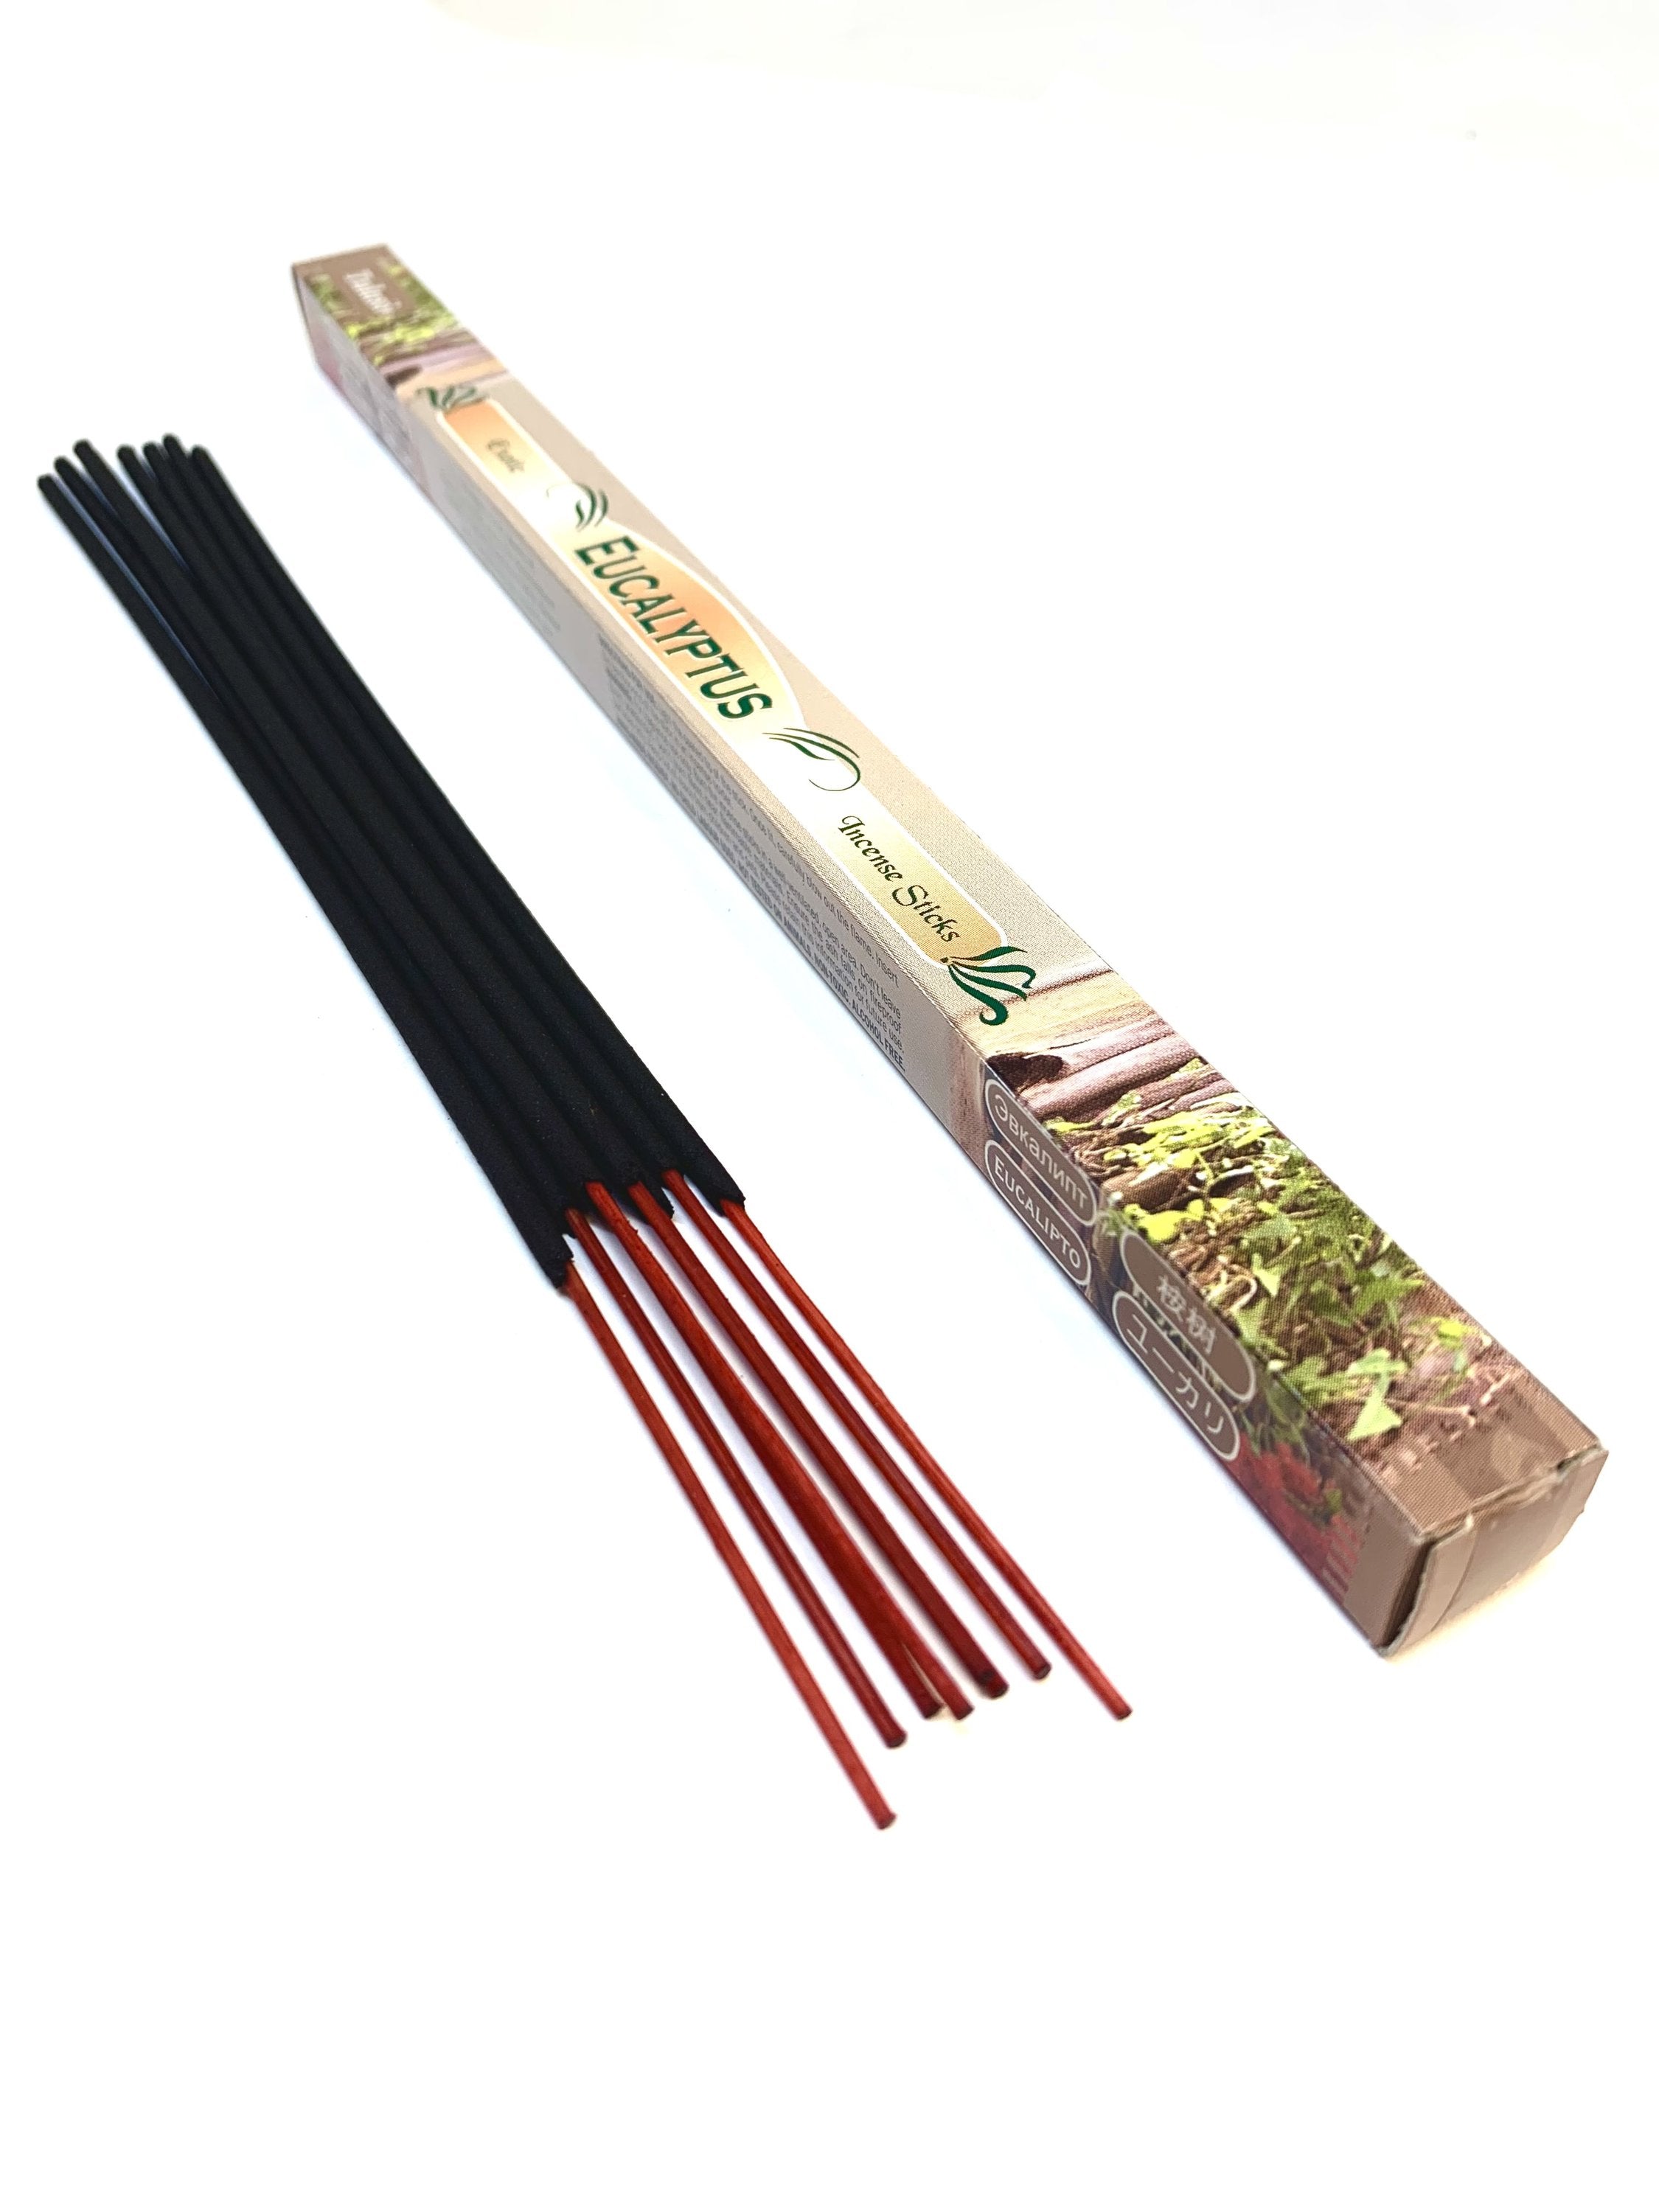 Eucalyptus Incense Sticks (Pack of 8 sticks) Teal Lily